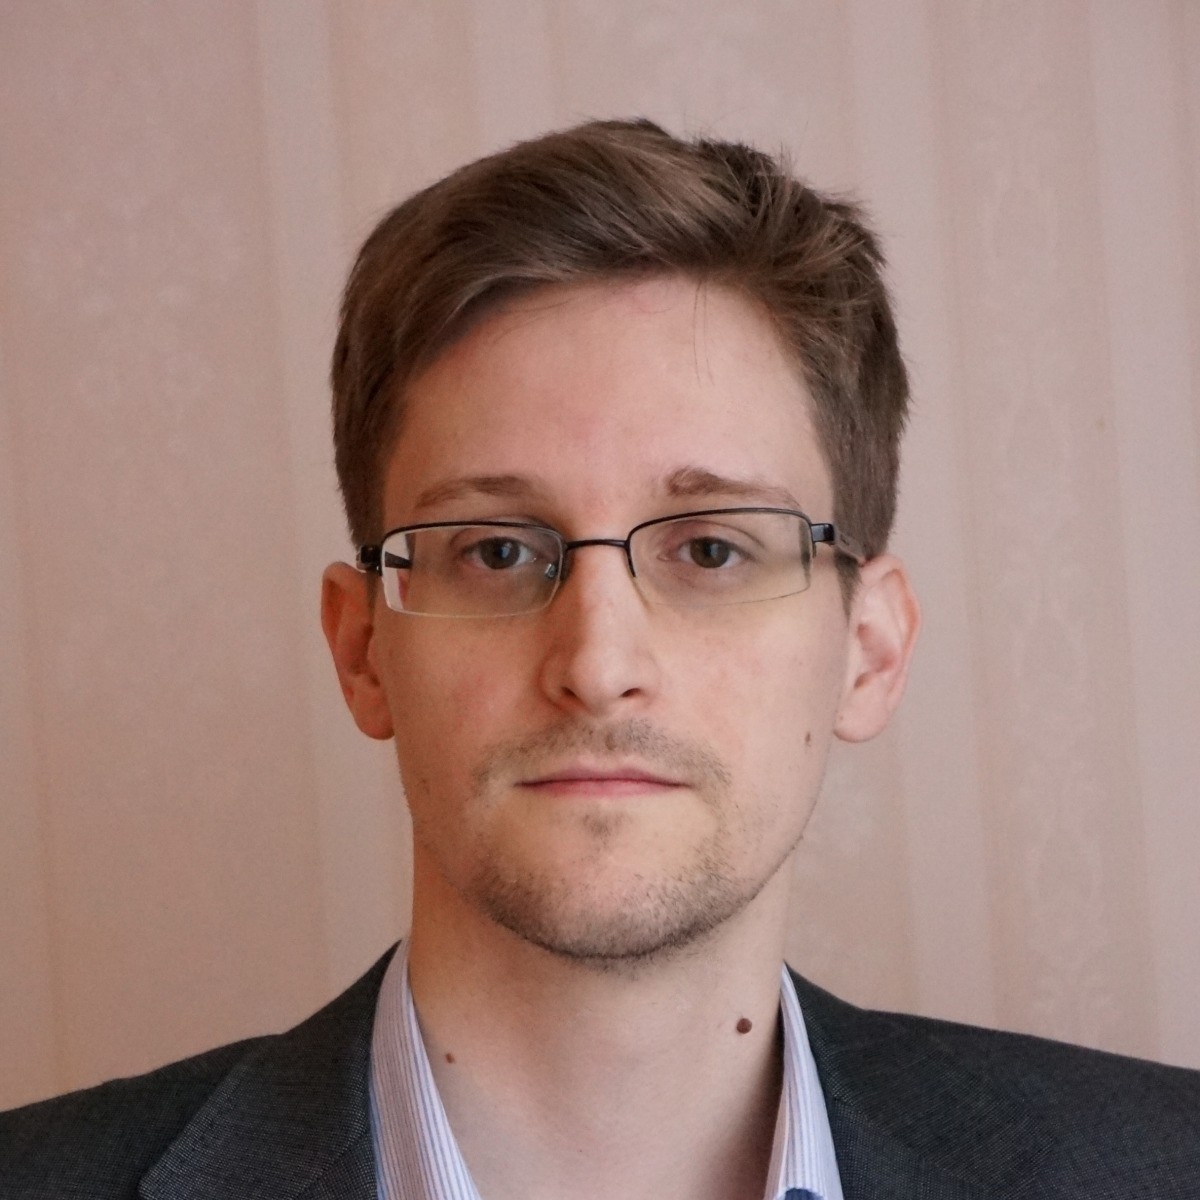 Edward Snowden's headshot